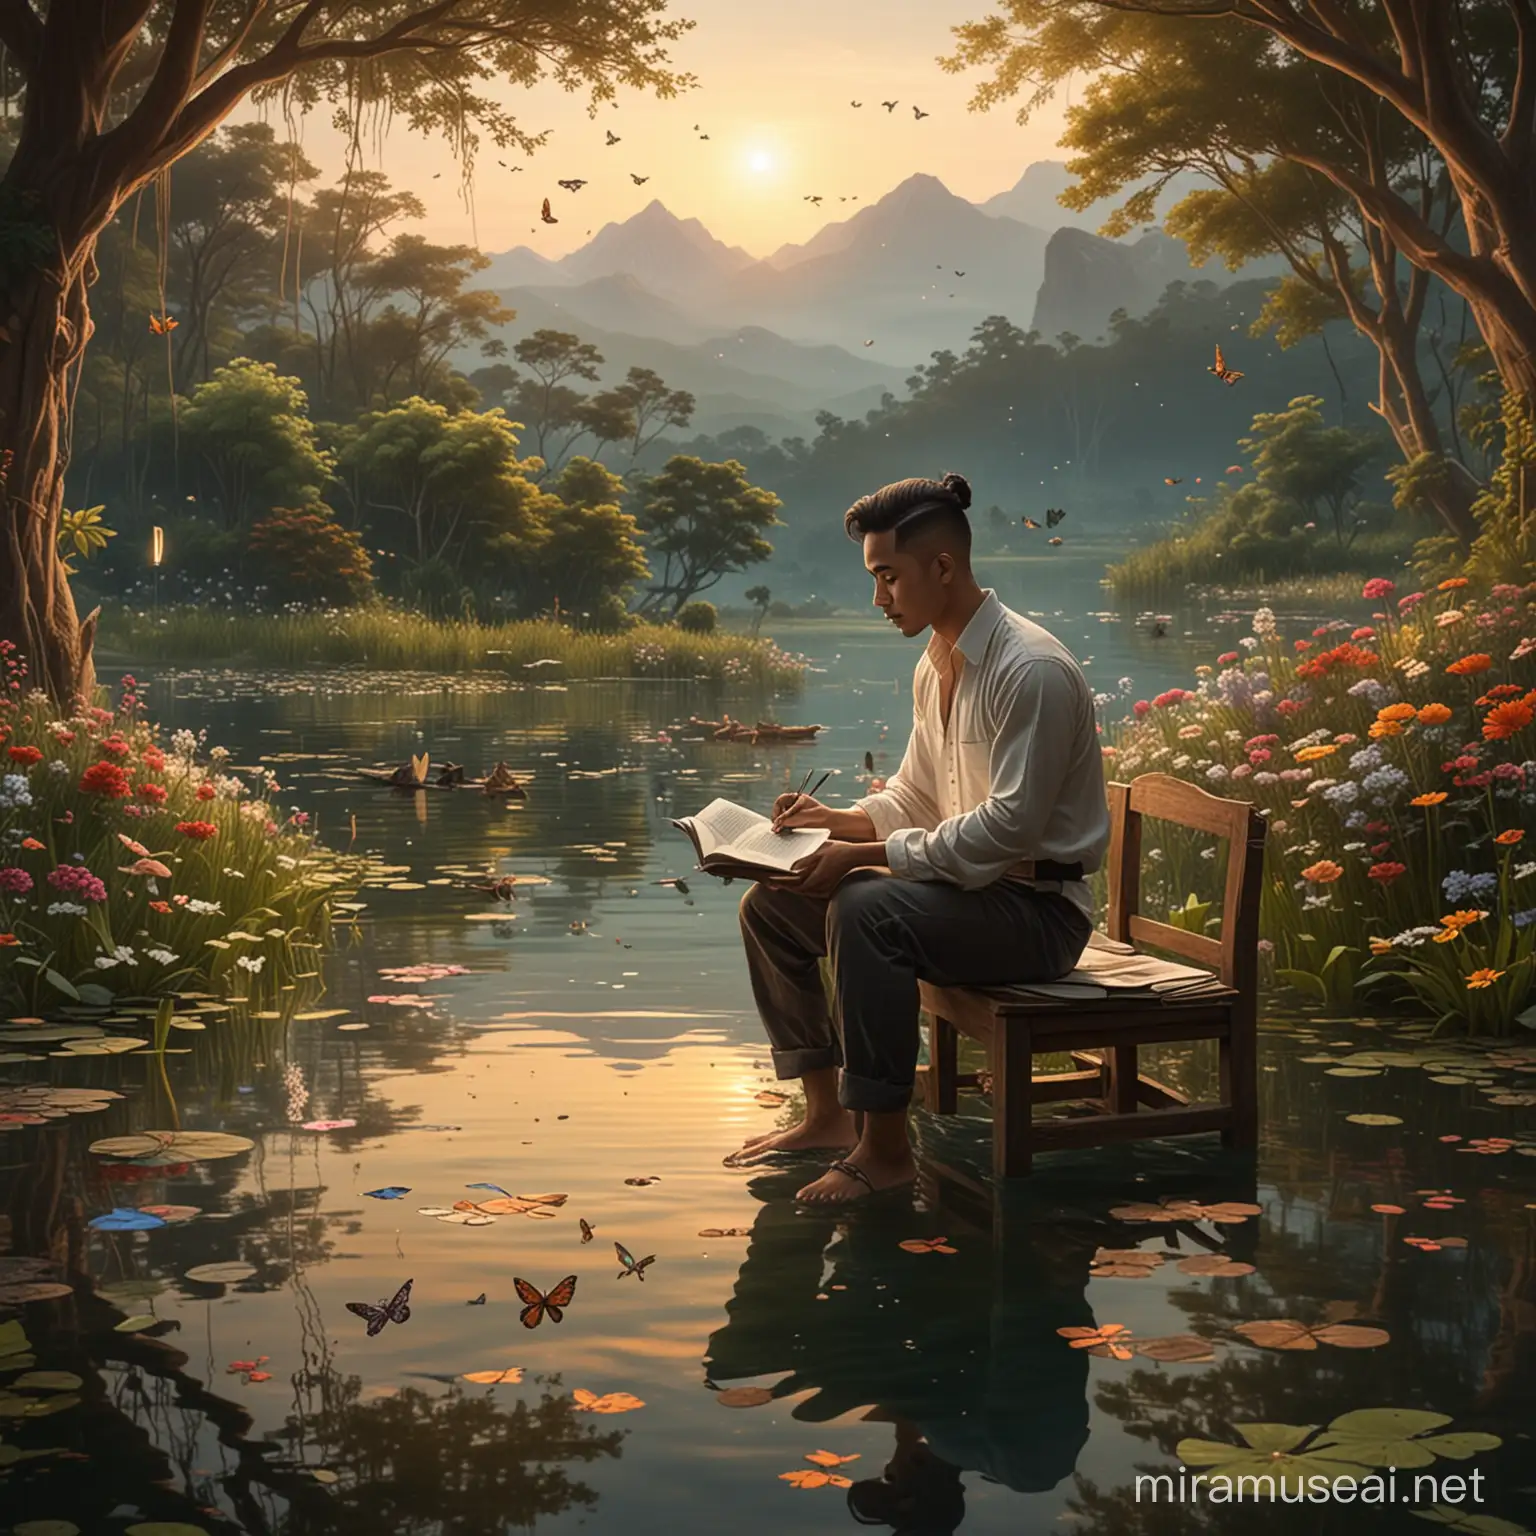 Seorang pria tampan indonesia, undercut bun hair, sedang duduk di kursi kayu tepat di tengah tengah danau, dengan memegang buku seakan sedang membaca dengan penghayatan, suasana sore hari, pemandangan sekeliling penuh bunga, kupu kupu, hewan aneh dan pepohonan, seperti di dalam film fantasi